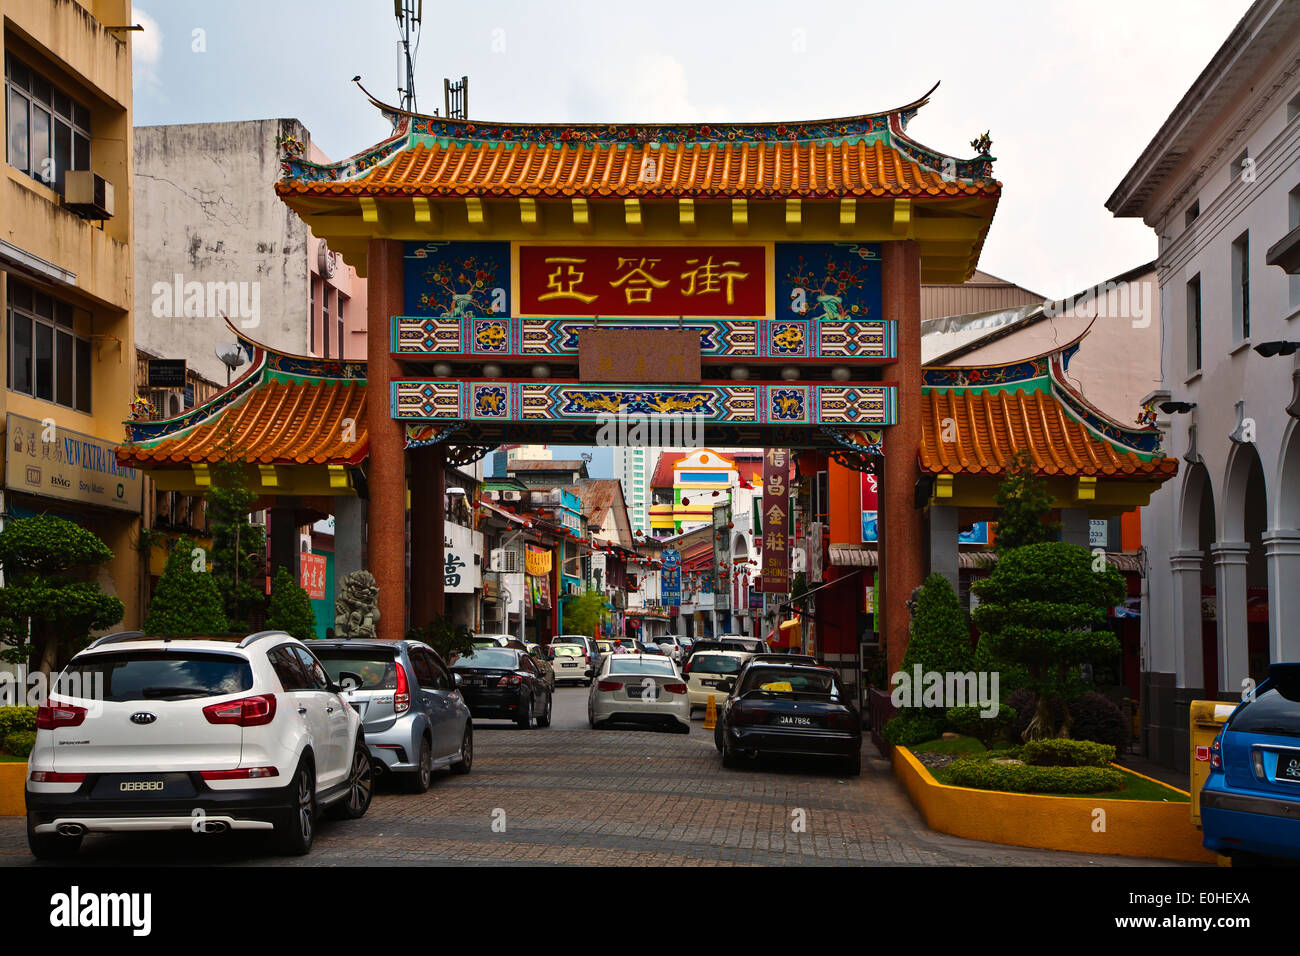 Entrance to CHINA TOWN in the city of KUCHING - SARAWAK, BORNEO, MALAYSIA Stock Photo